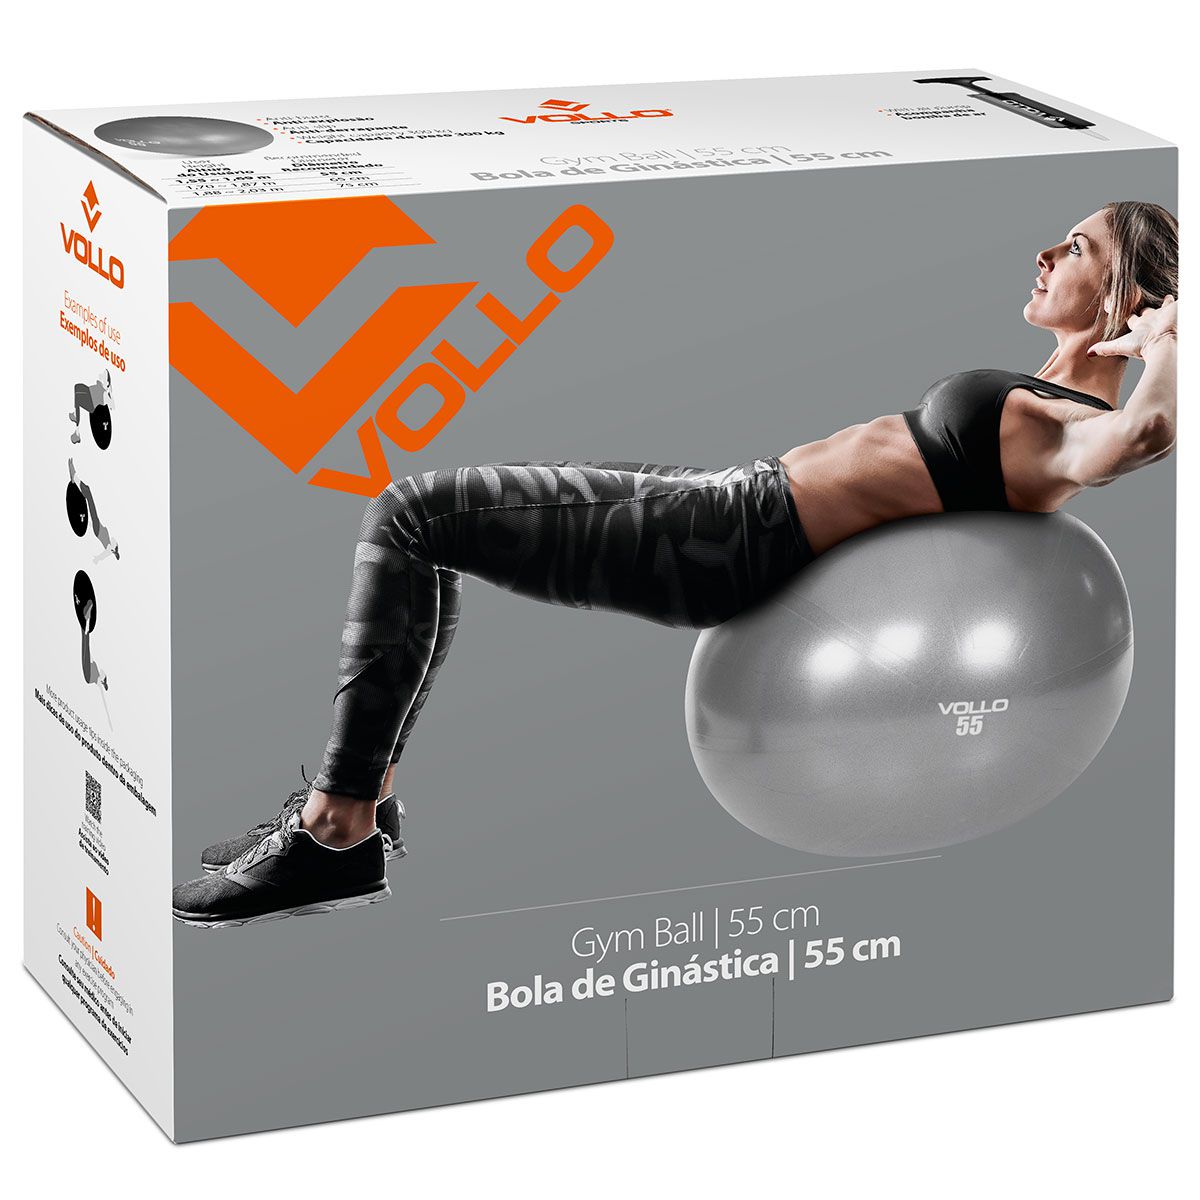 Bola Pilates Gym Ball Com Bomba 55 Cm Cinza Vollo